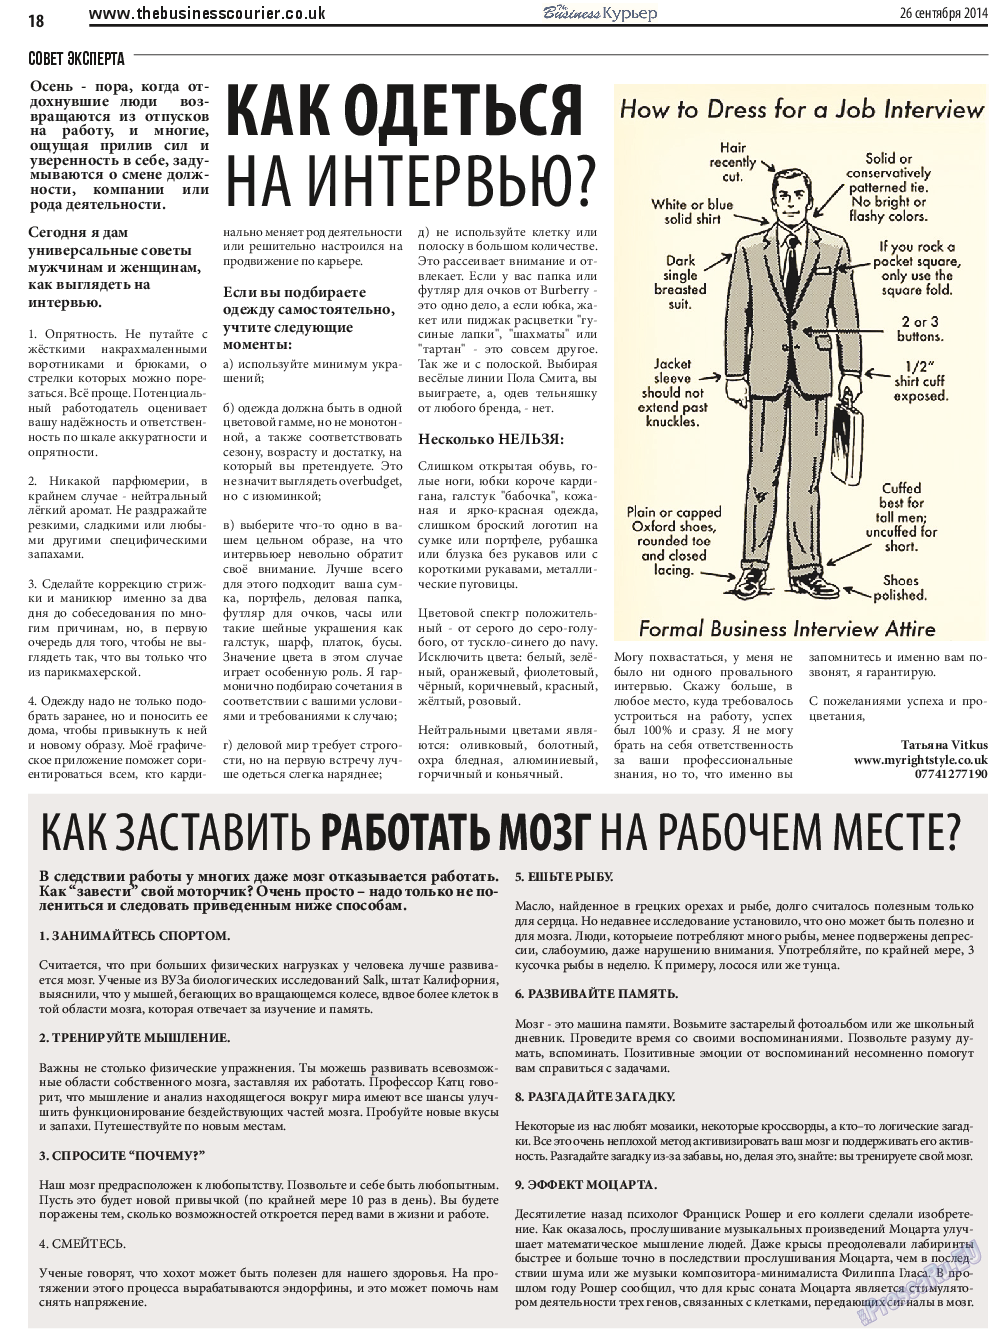 The Business Курьер, газета. 2014 №25 стр.18